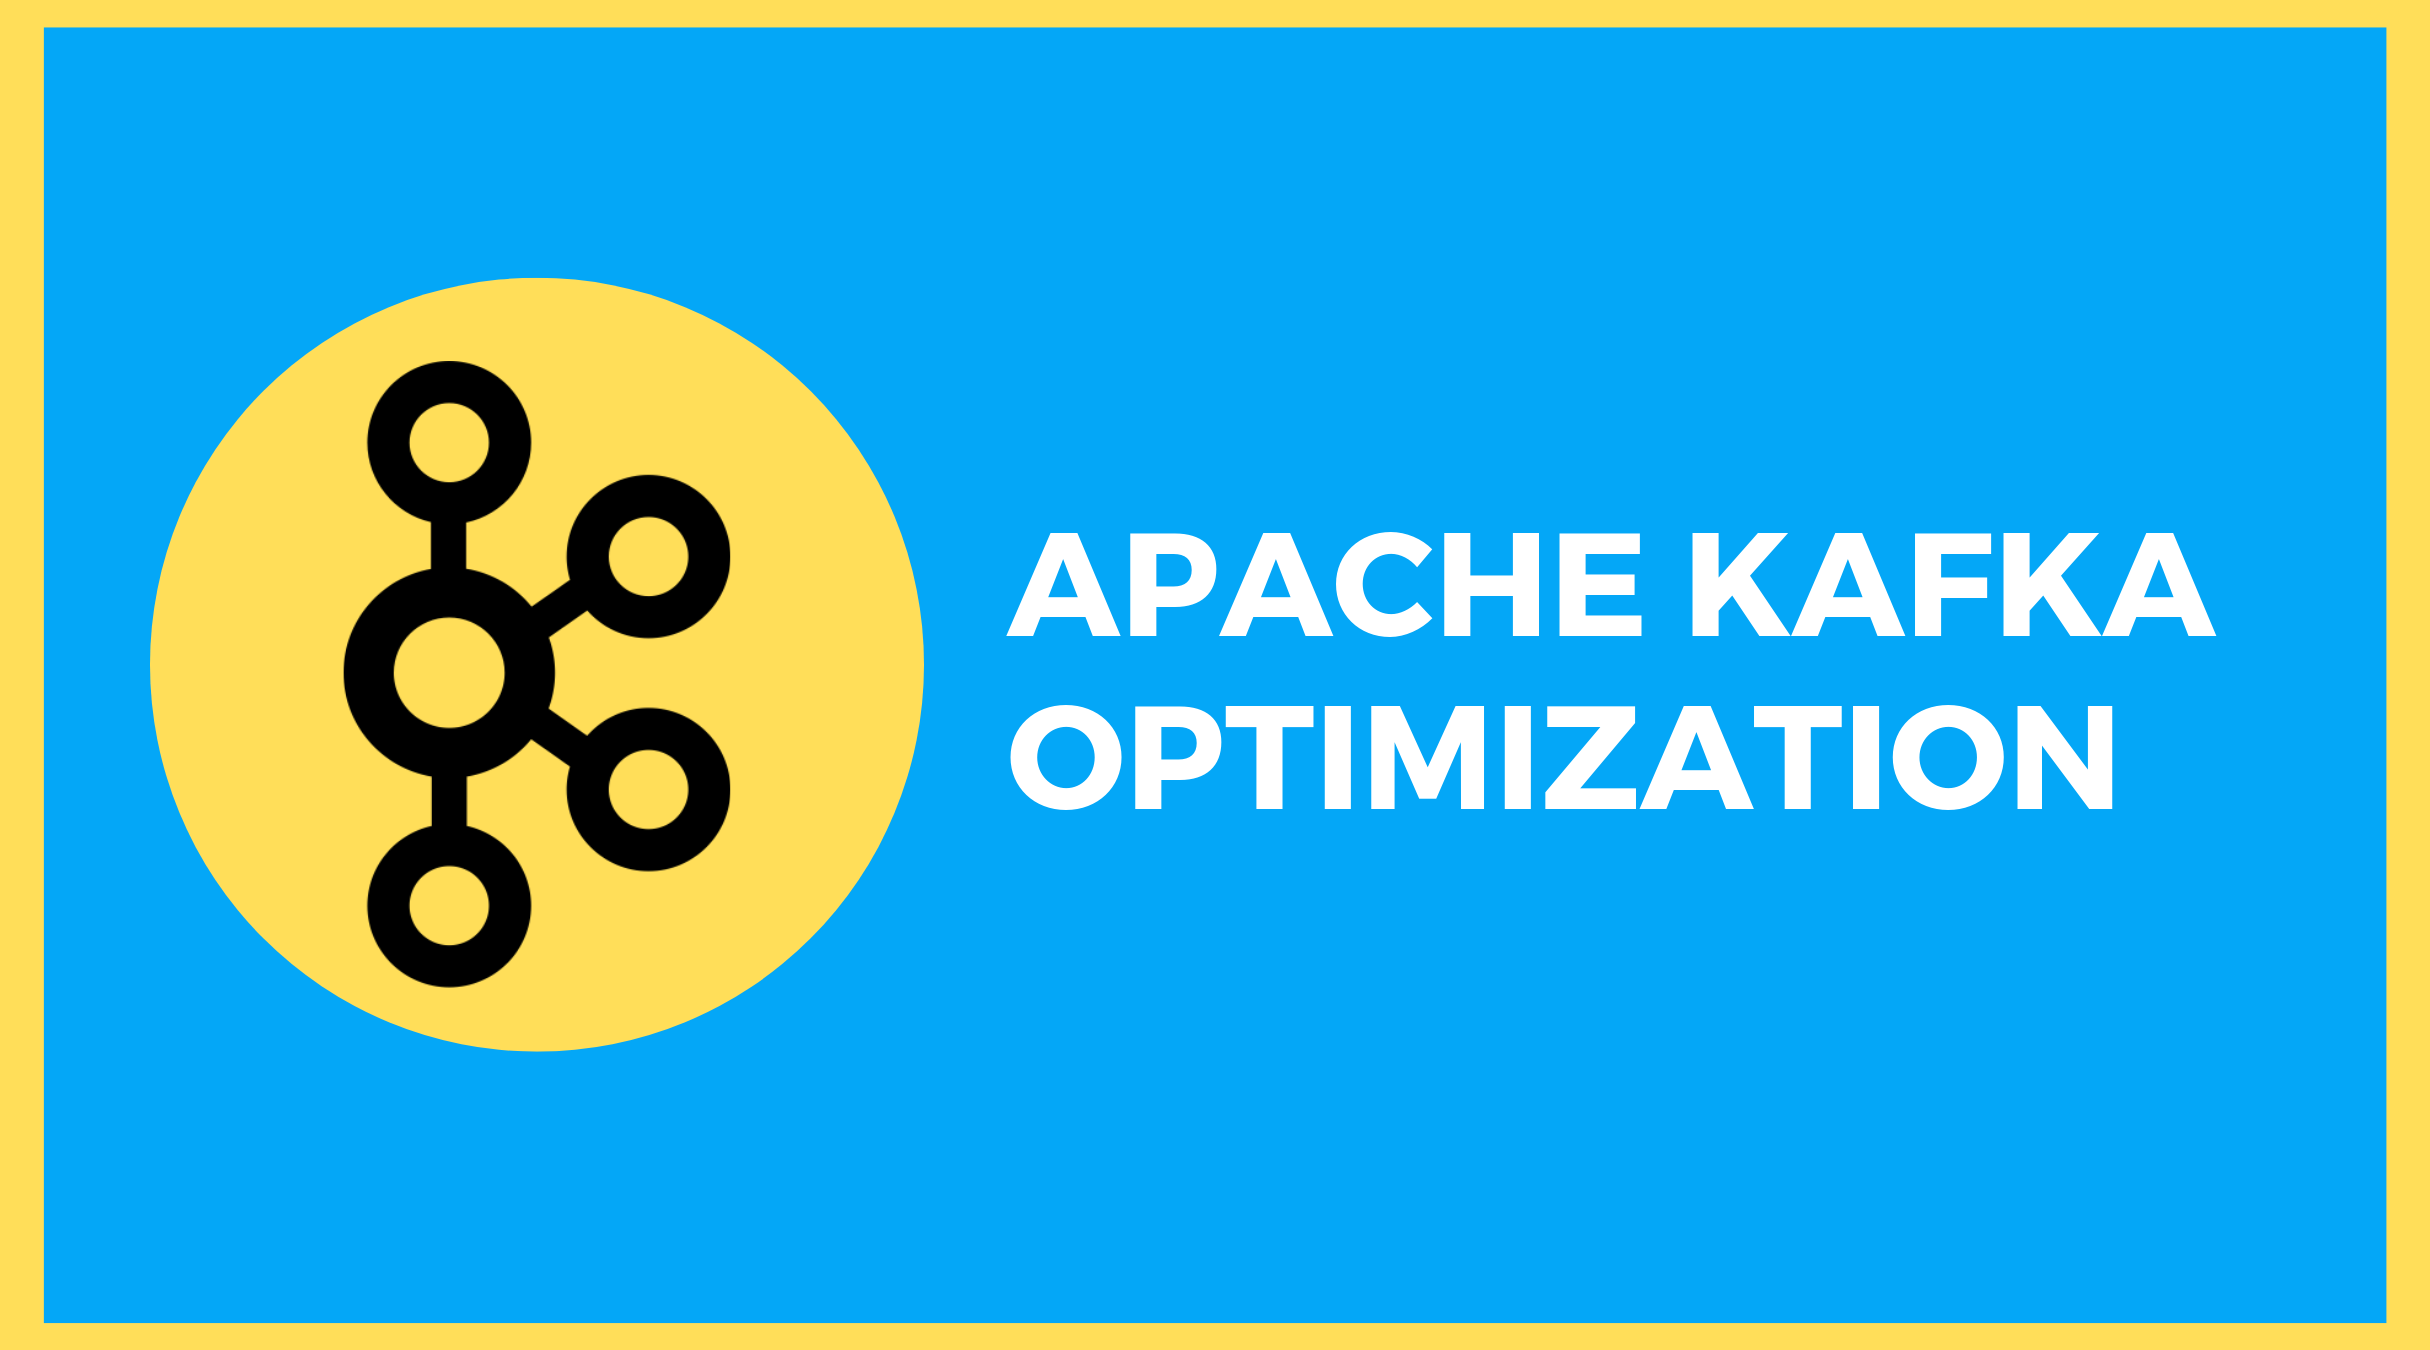 The image contains the Kafka logo and reads, "Apache Kafka Optimization."